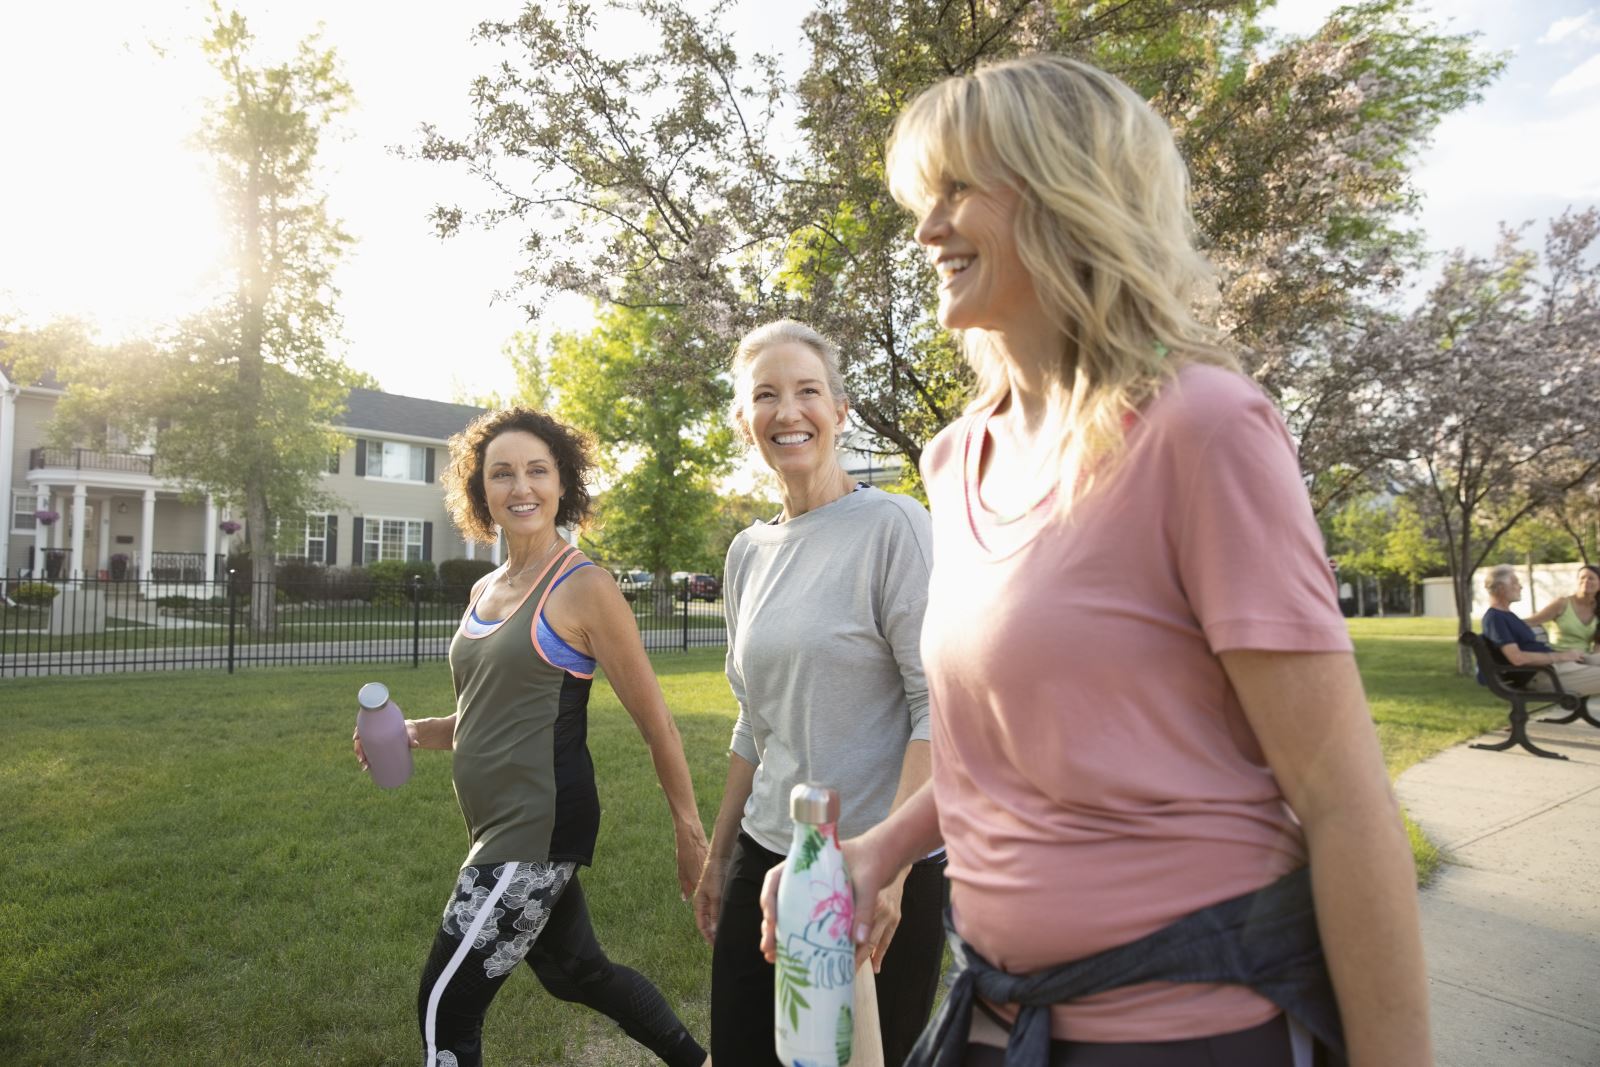 Three smiling woman walking in a neighborhood.